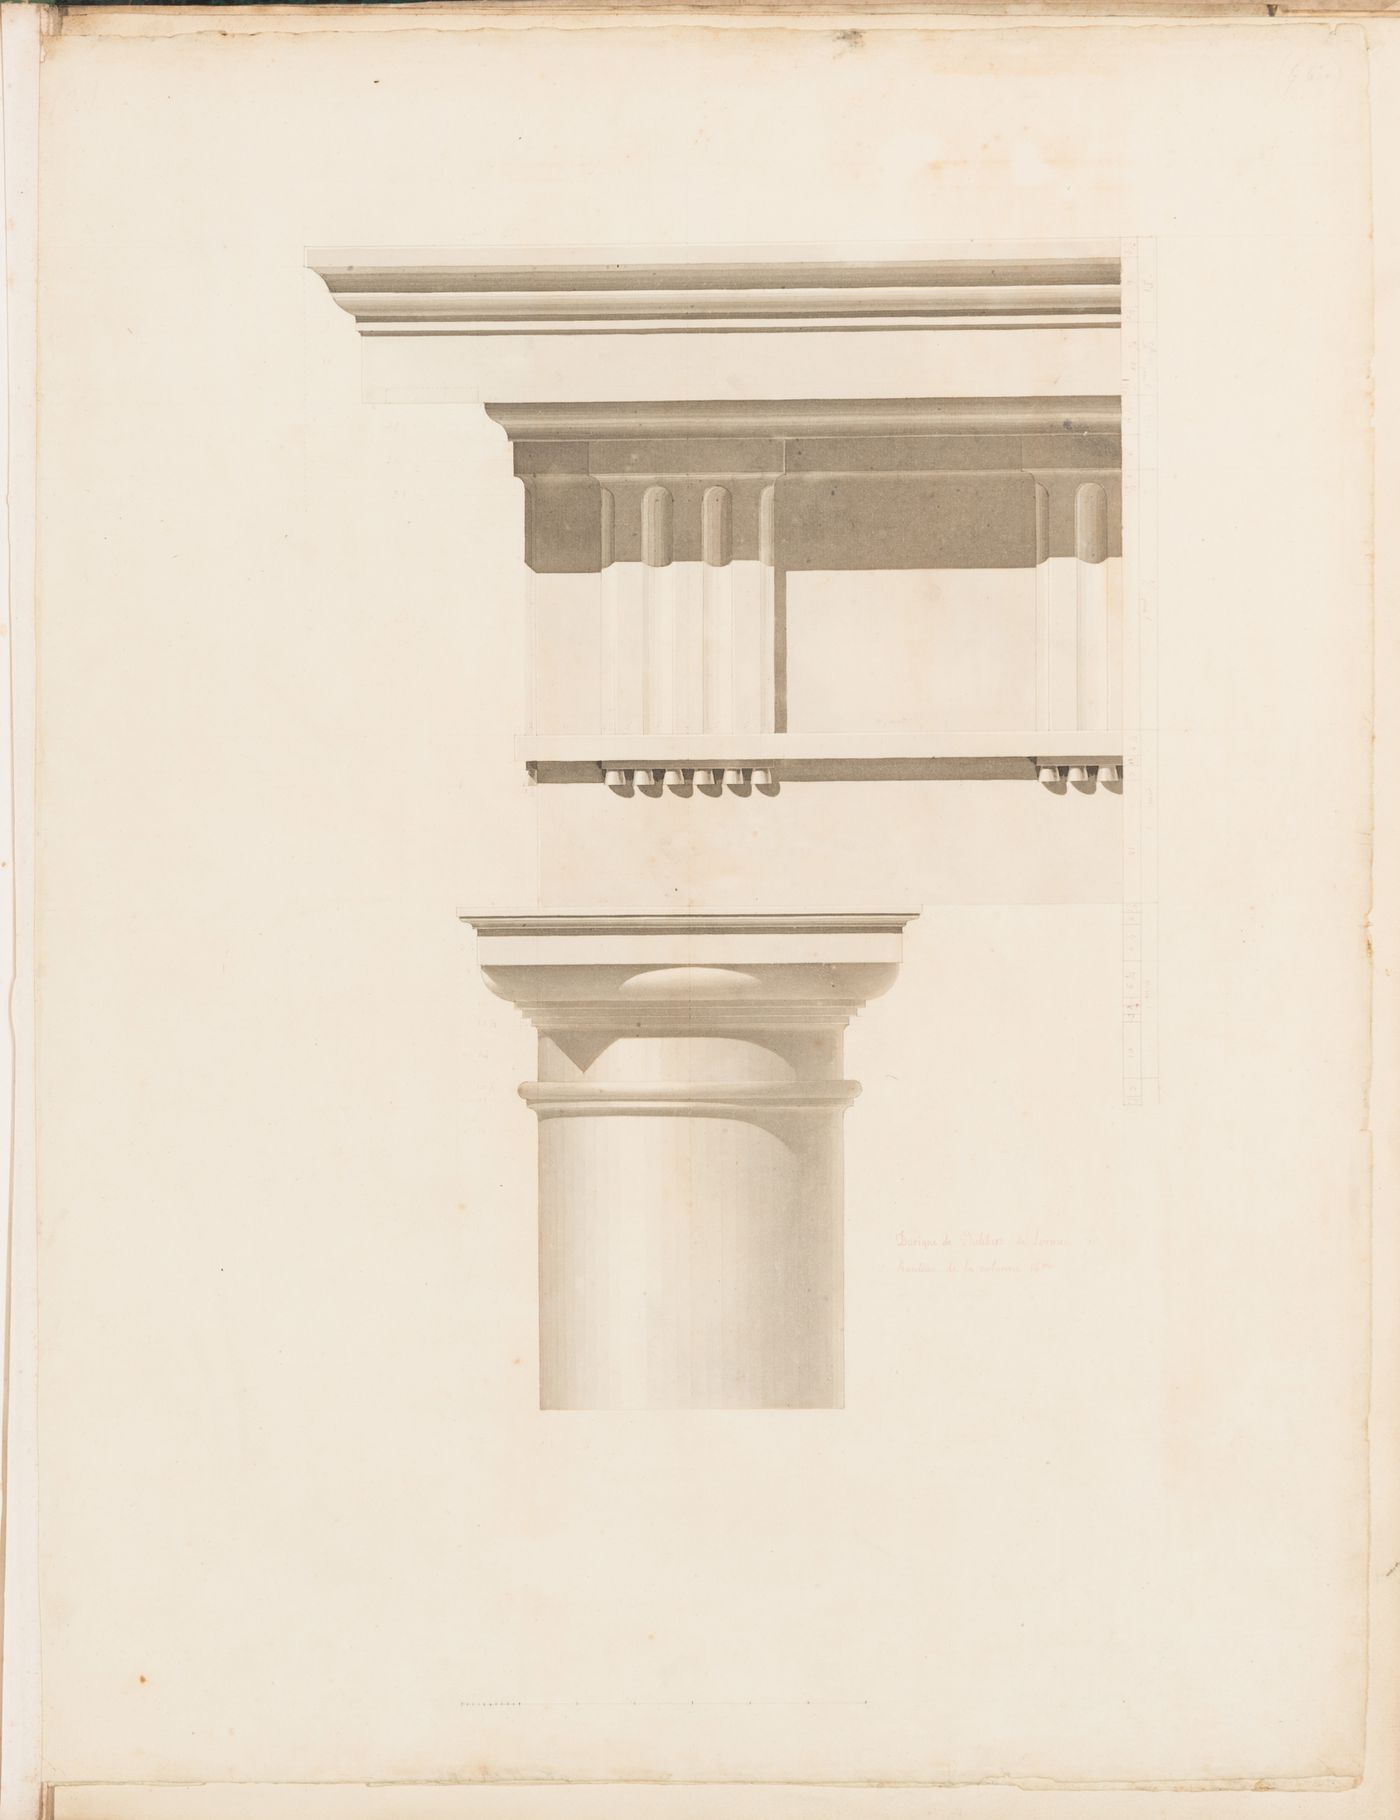 Elevation of a Doric column and entablature after Delorme